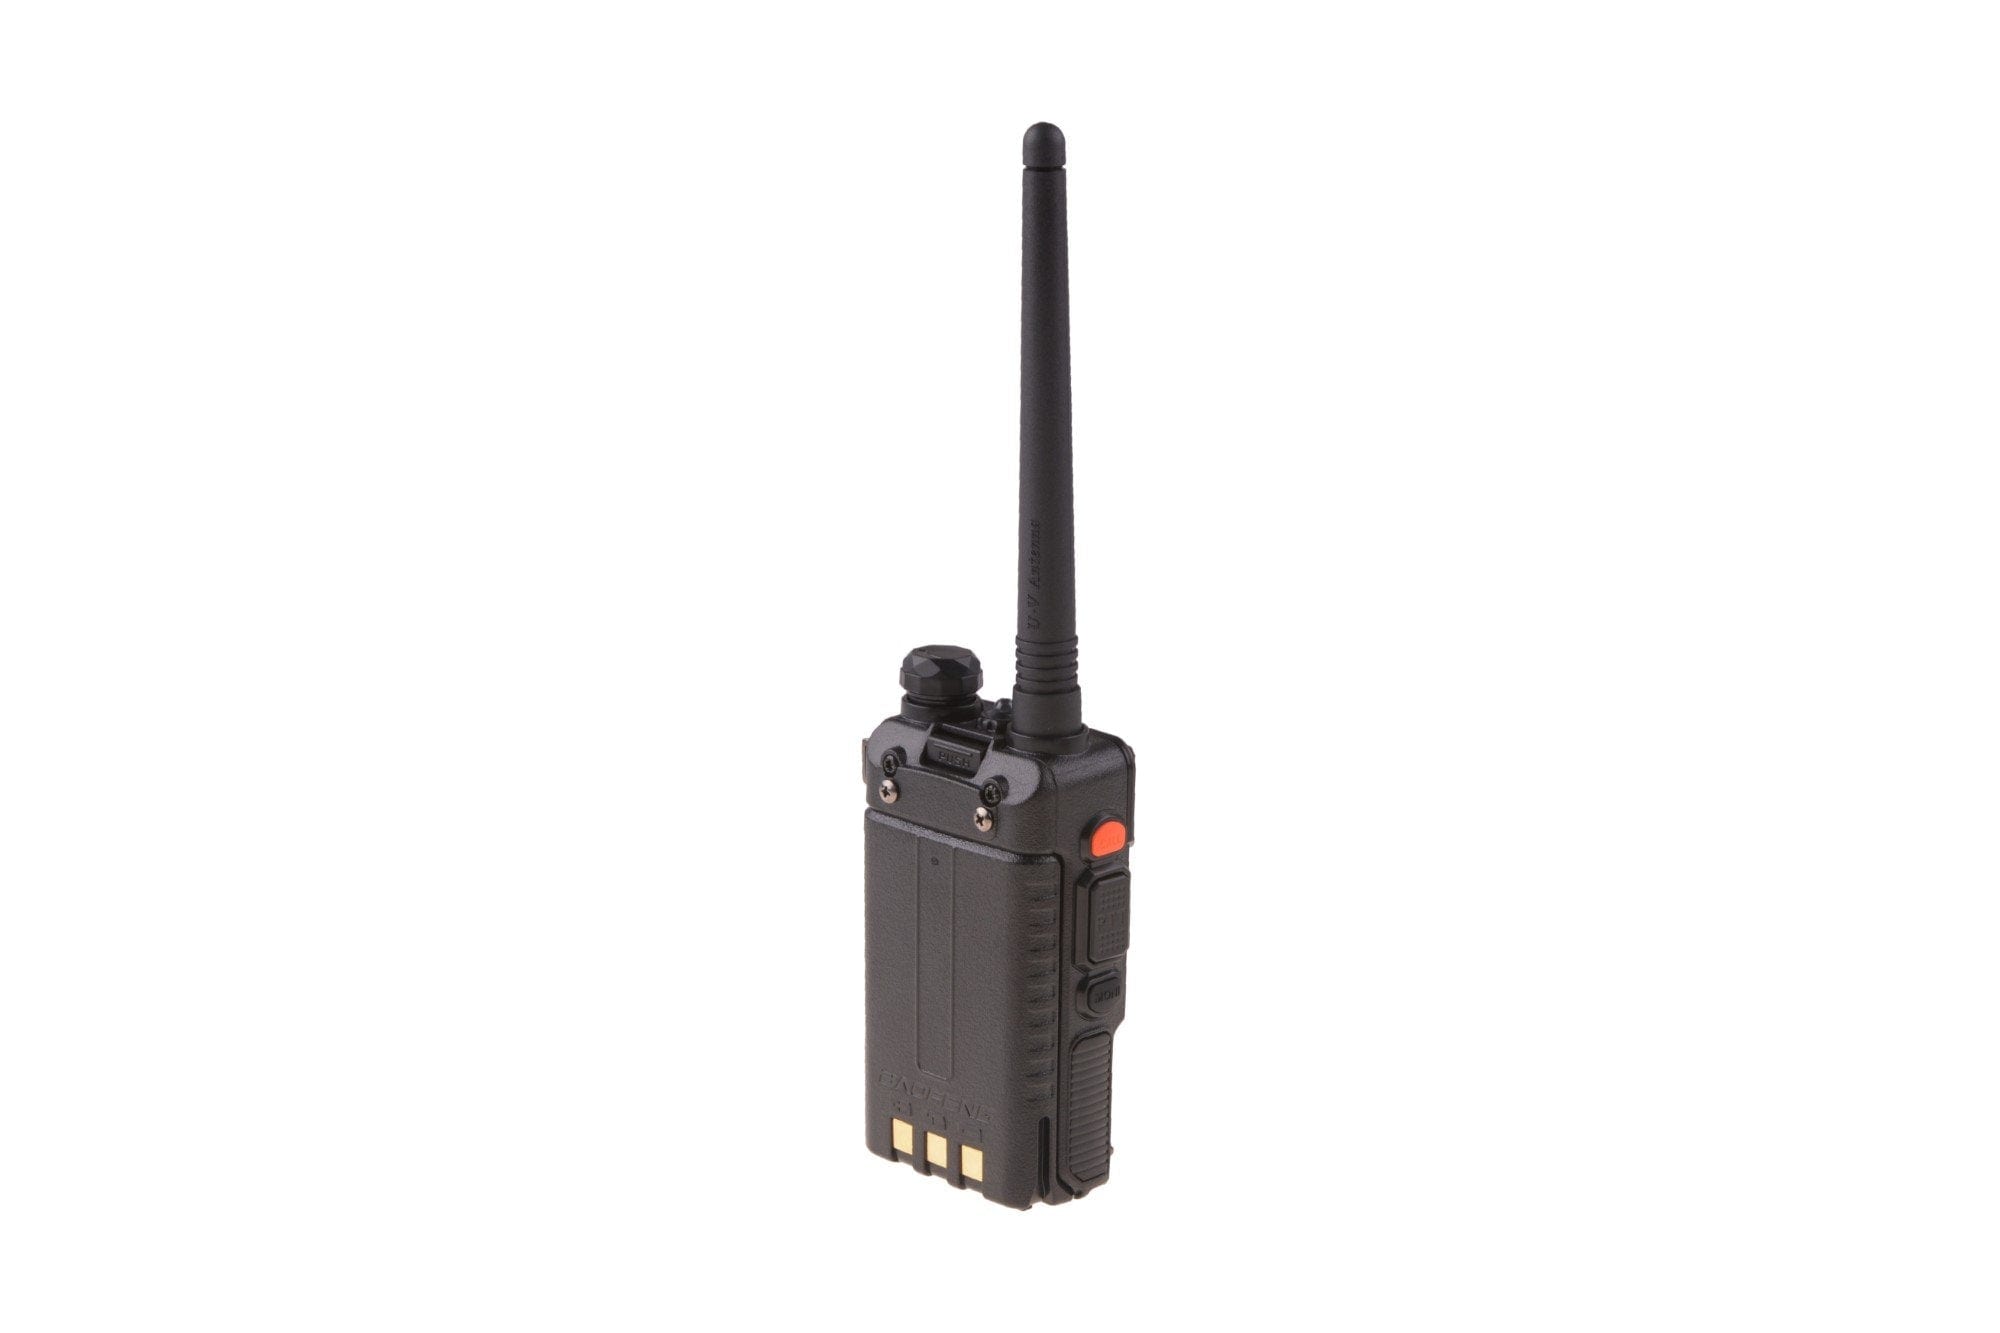 Manual Dual Band Baofeng UV-5RTP Radio - Short Battery (VHF / UHF) by Bao Feng on Airsoft Mania Europe